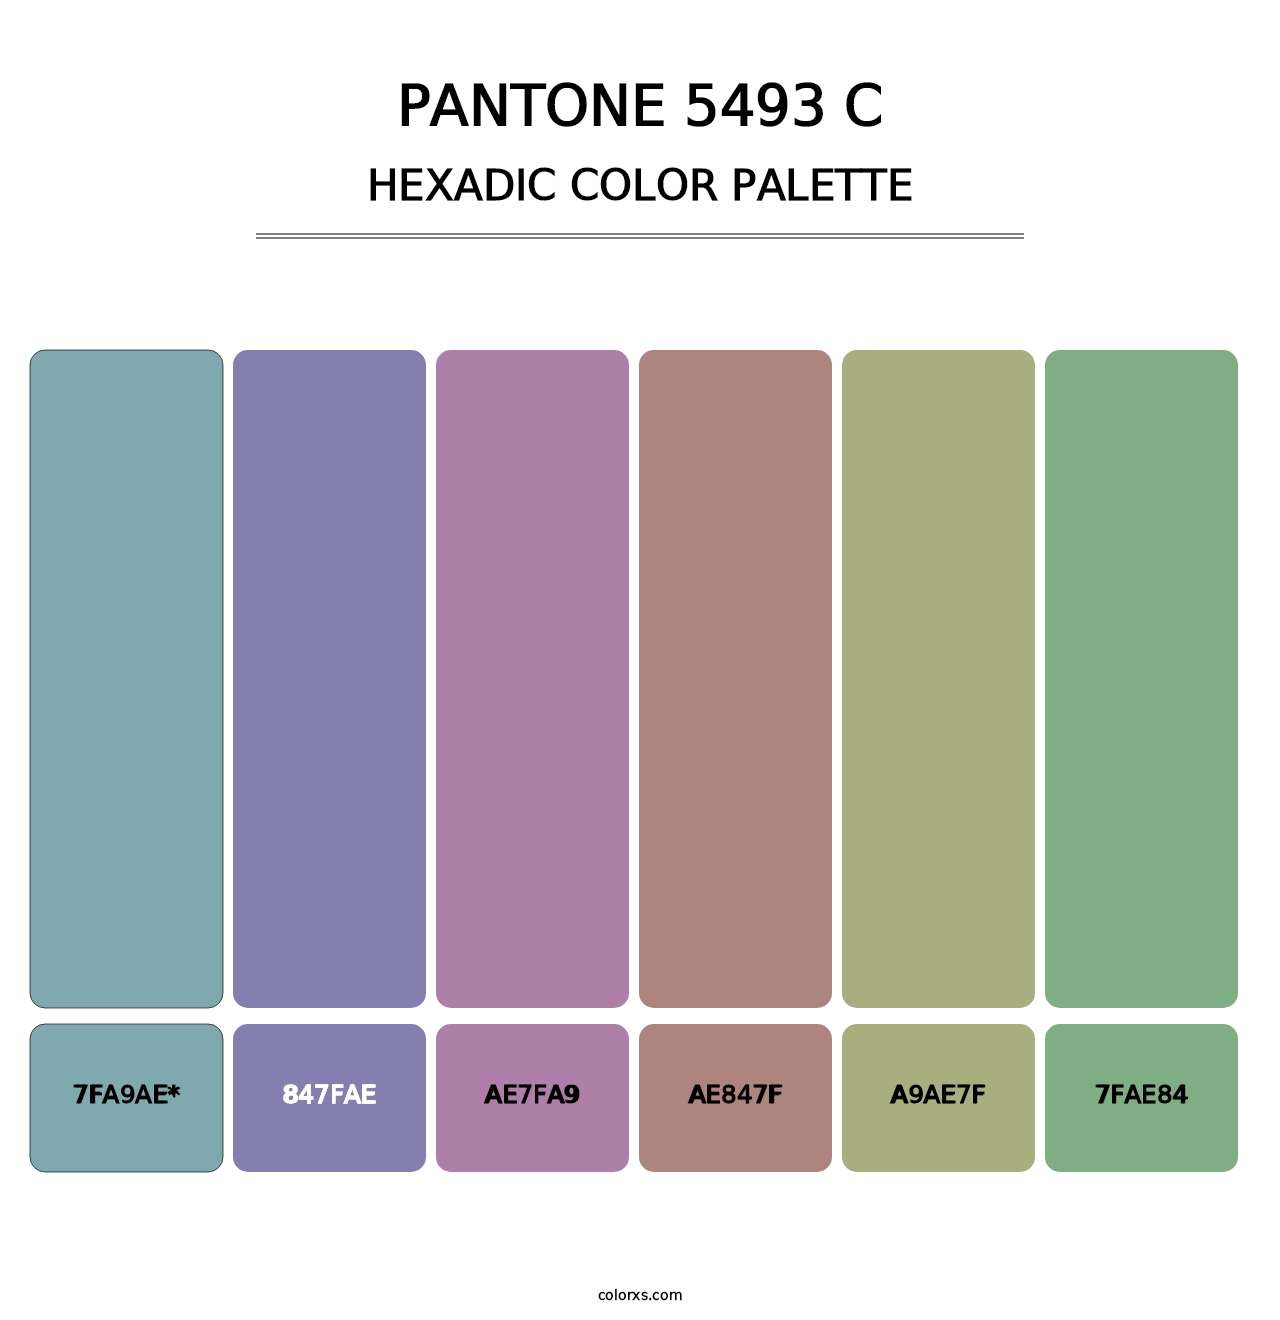 PANTONE 5493 C - Hexadic Color Palette